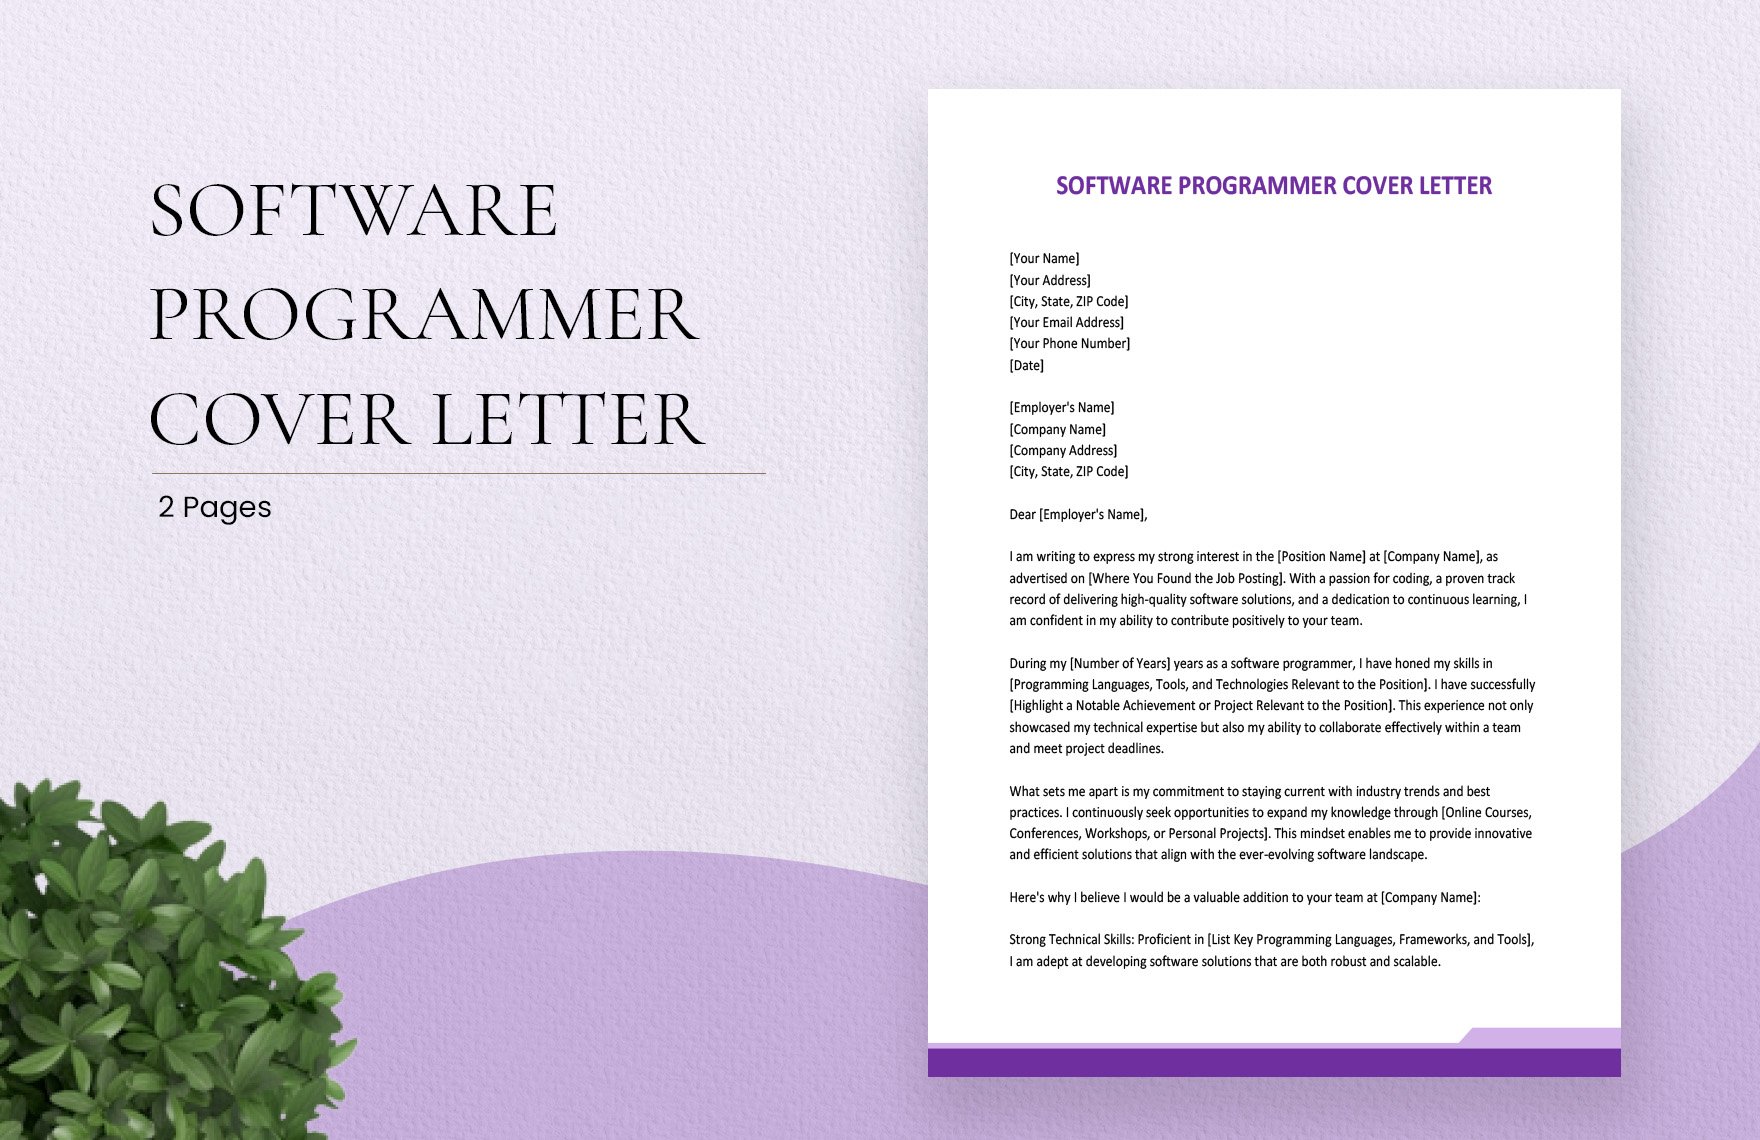 Software Programmer Cover Letter in Word, Google Docs